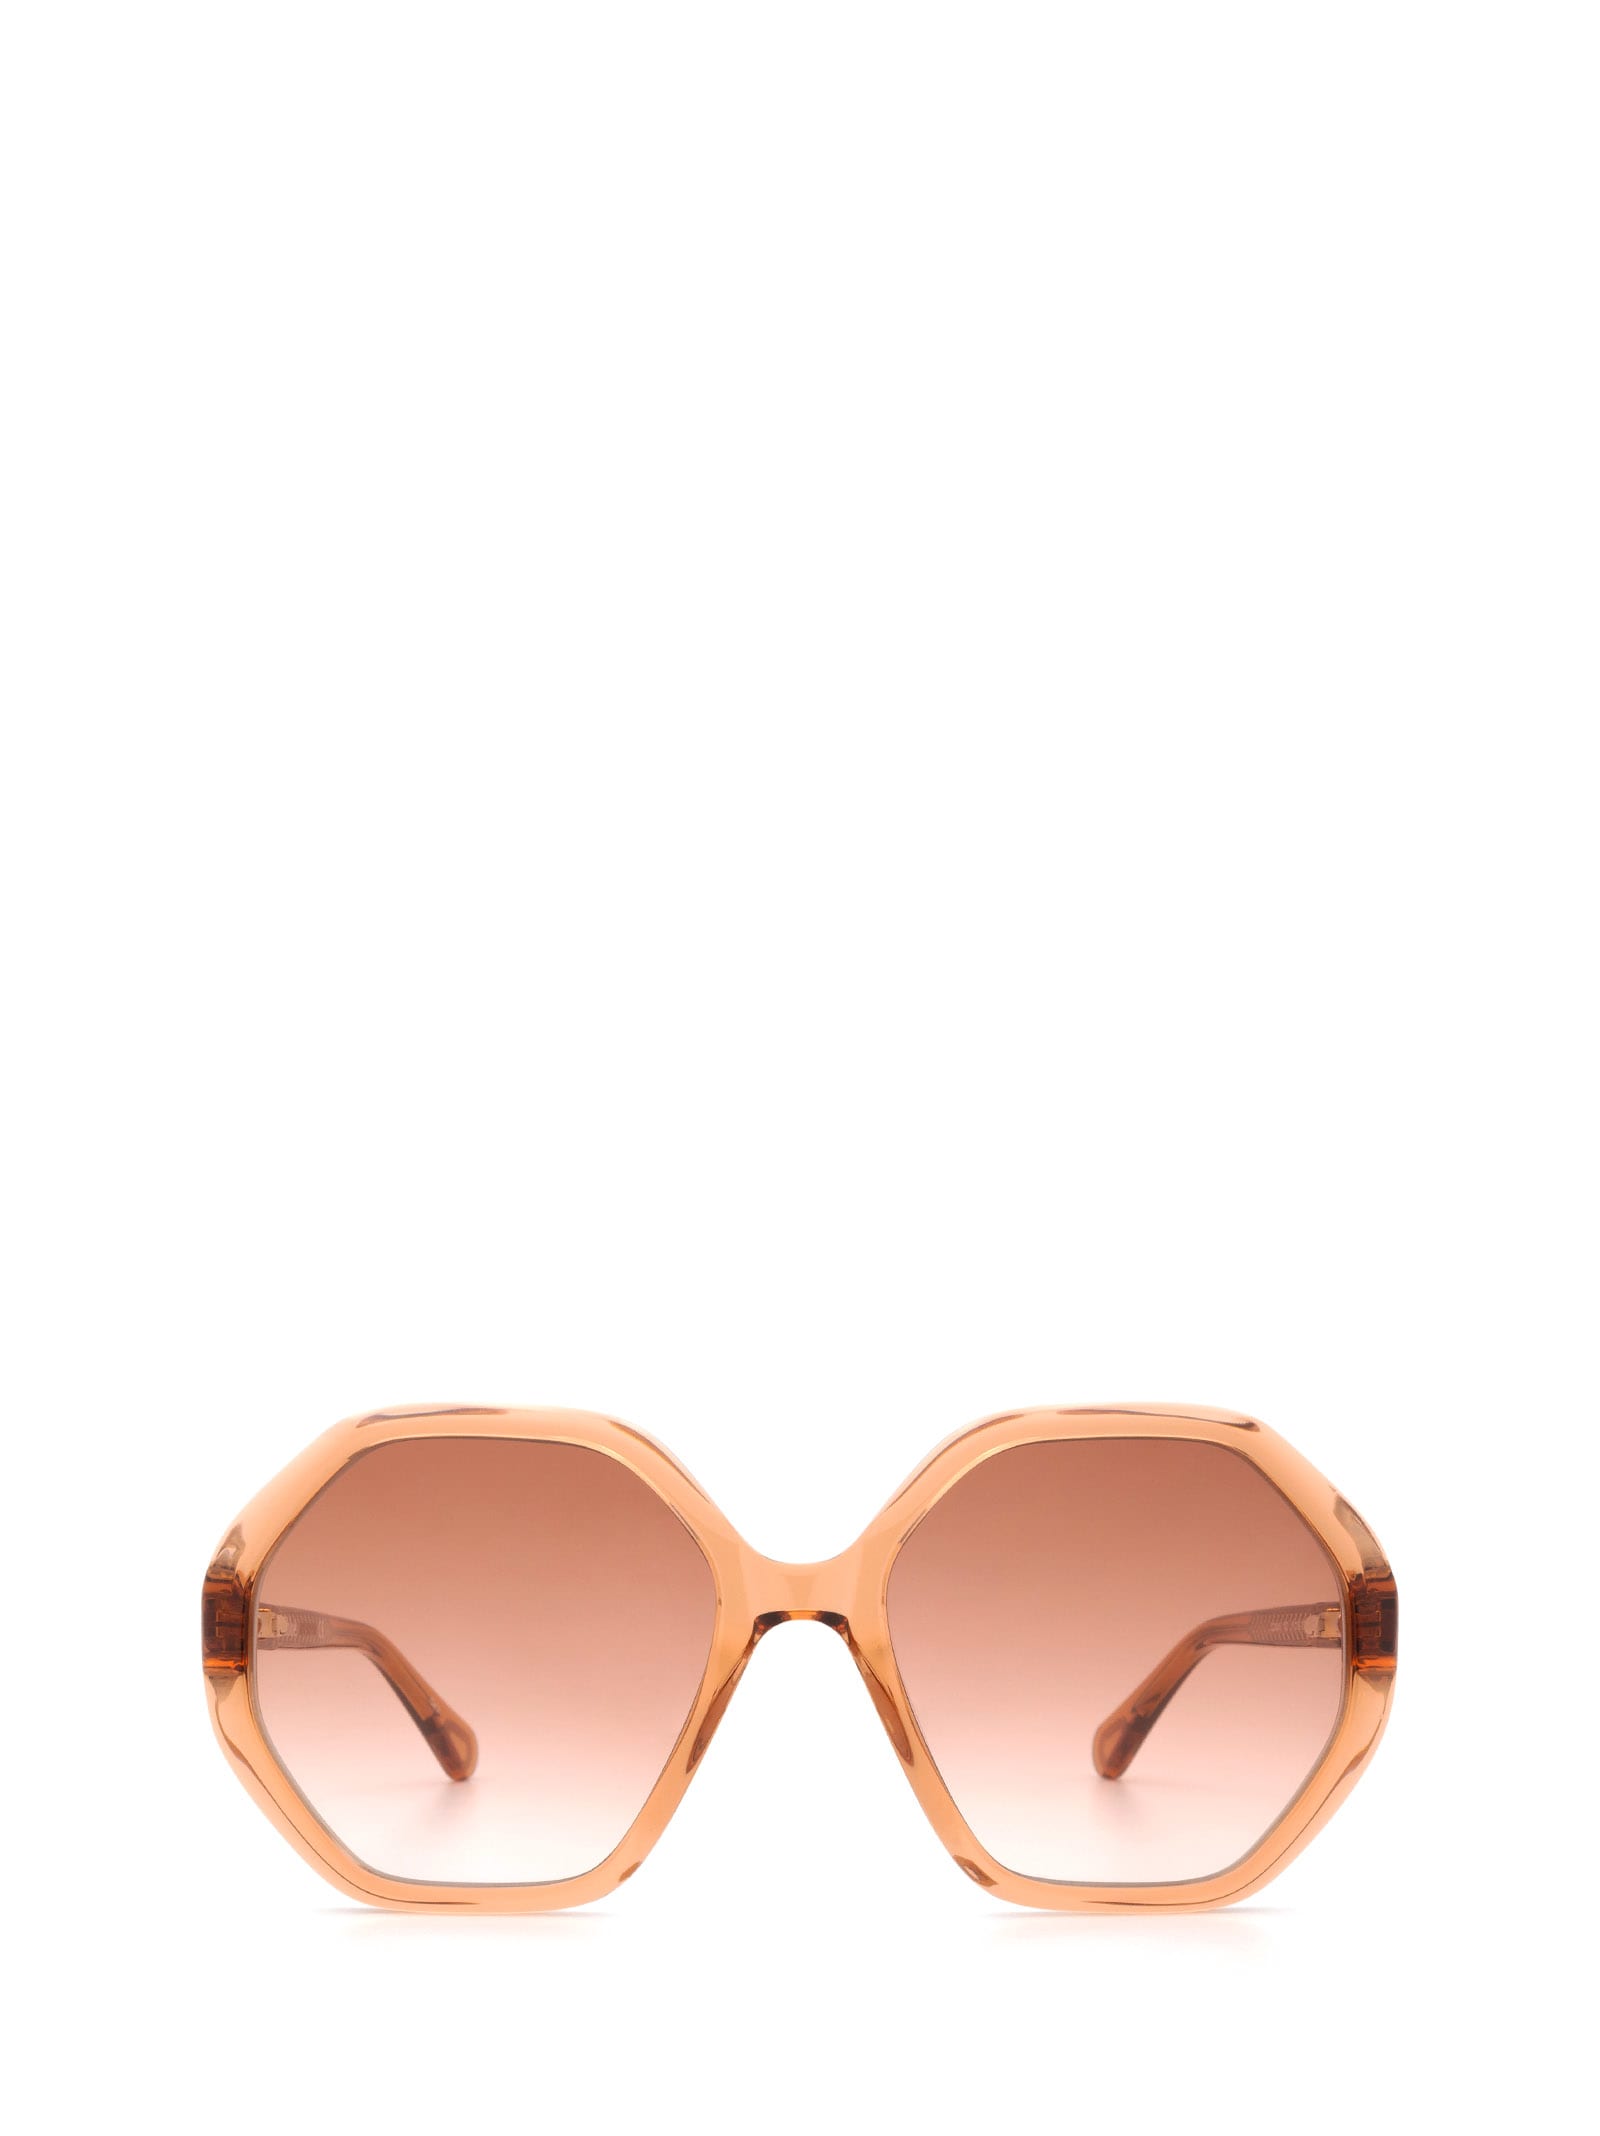 Chloé Eyewear Chloé Cc0004s Orange Sunglasses